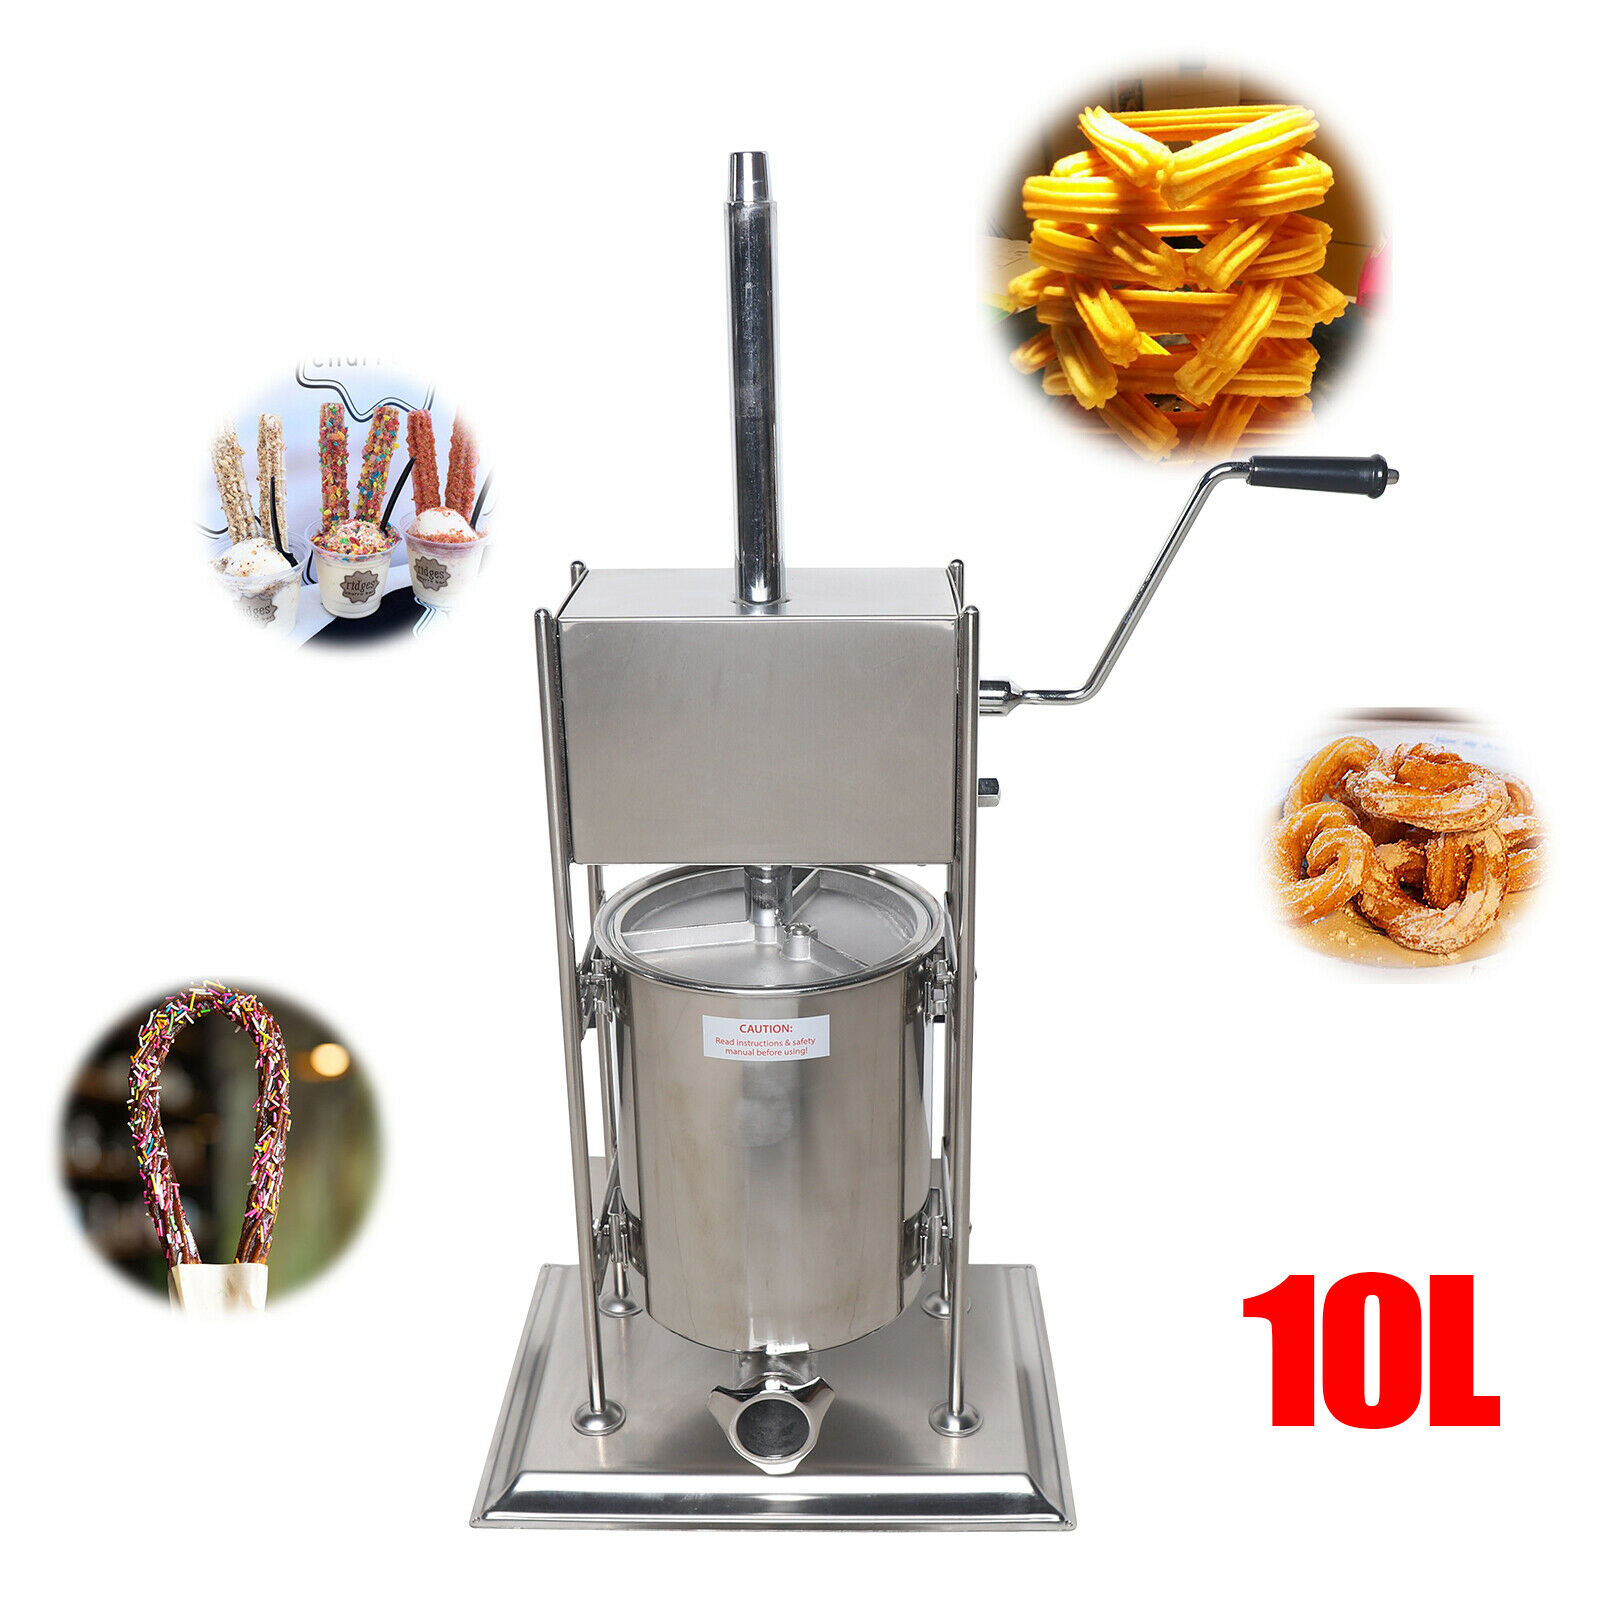 1*10l Commercial Manual Latin Fruit Donut Machine For Restaurant Stainless Steel